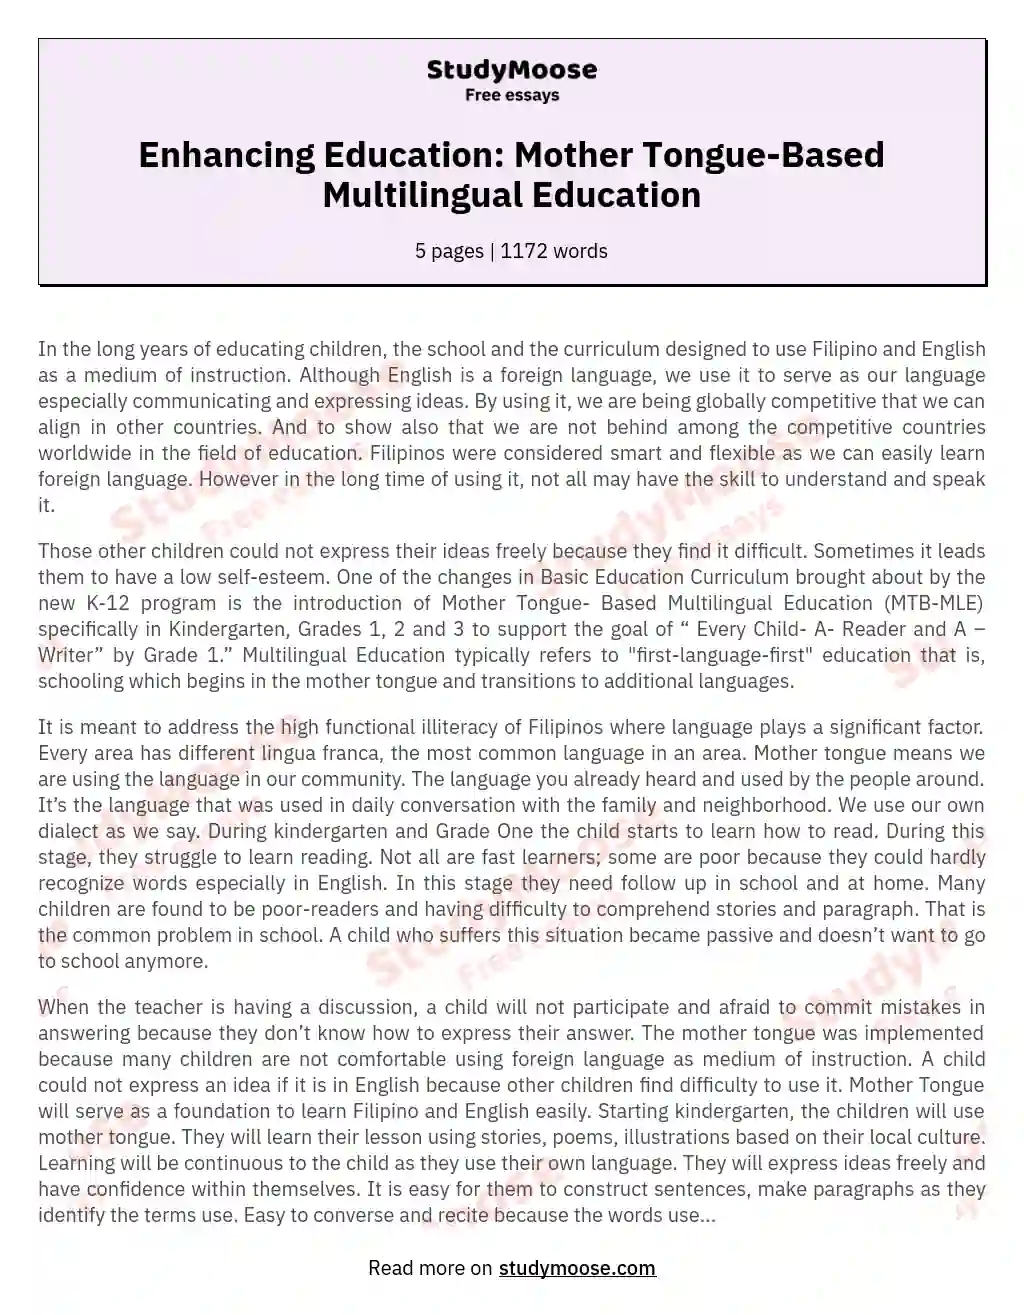 Enhancing Education: Mother Tongue-Based Multilingual Education essay